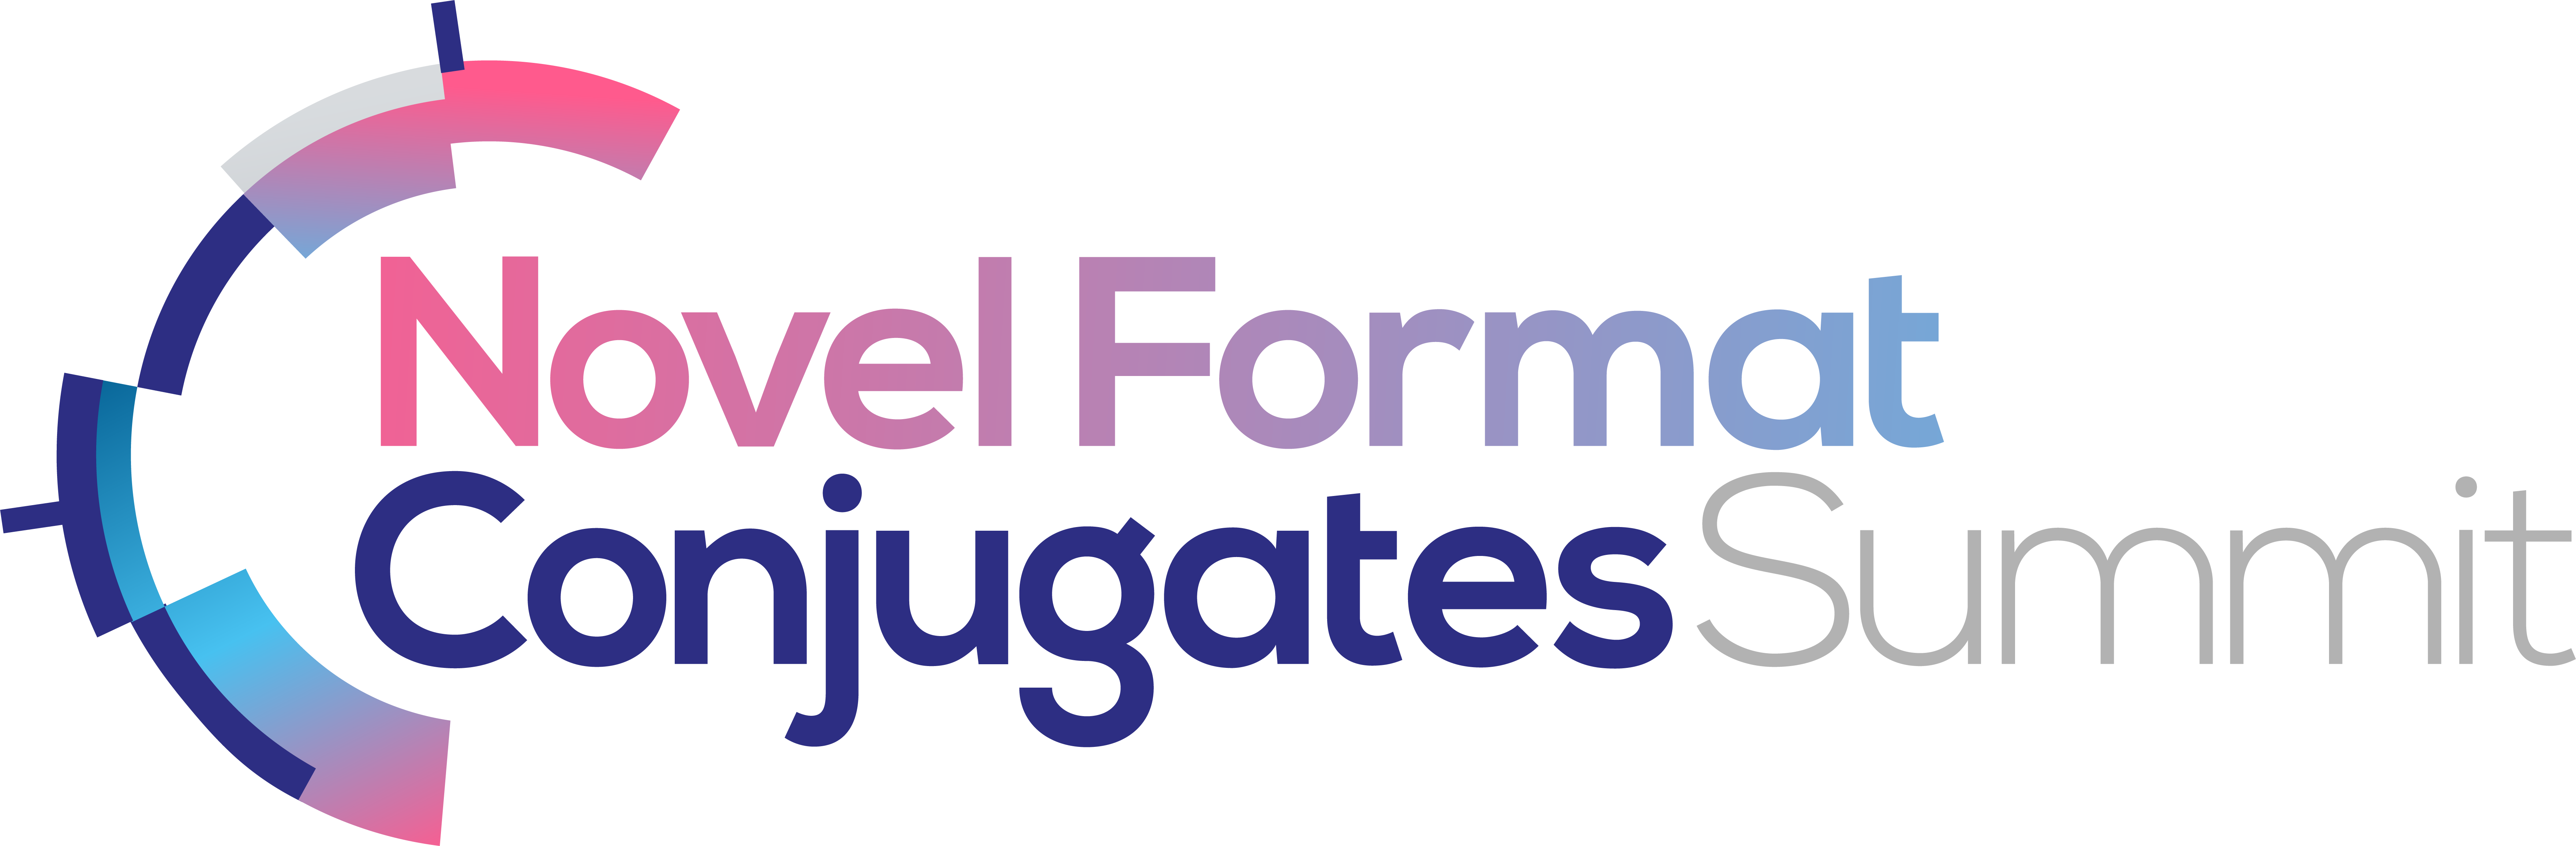 HW210915 Novel Format Conjugates Summit Logo FINAL NEW